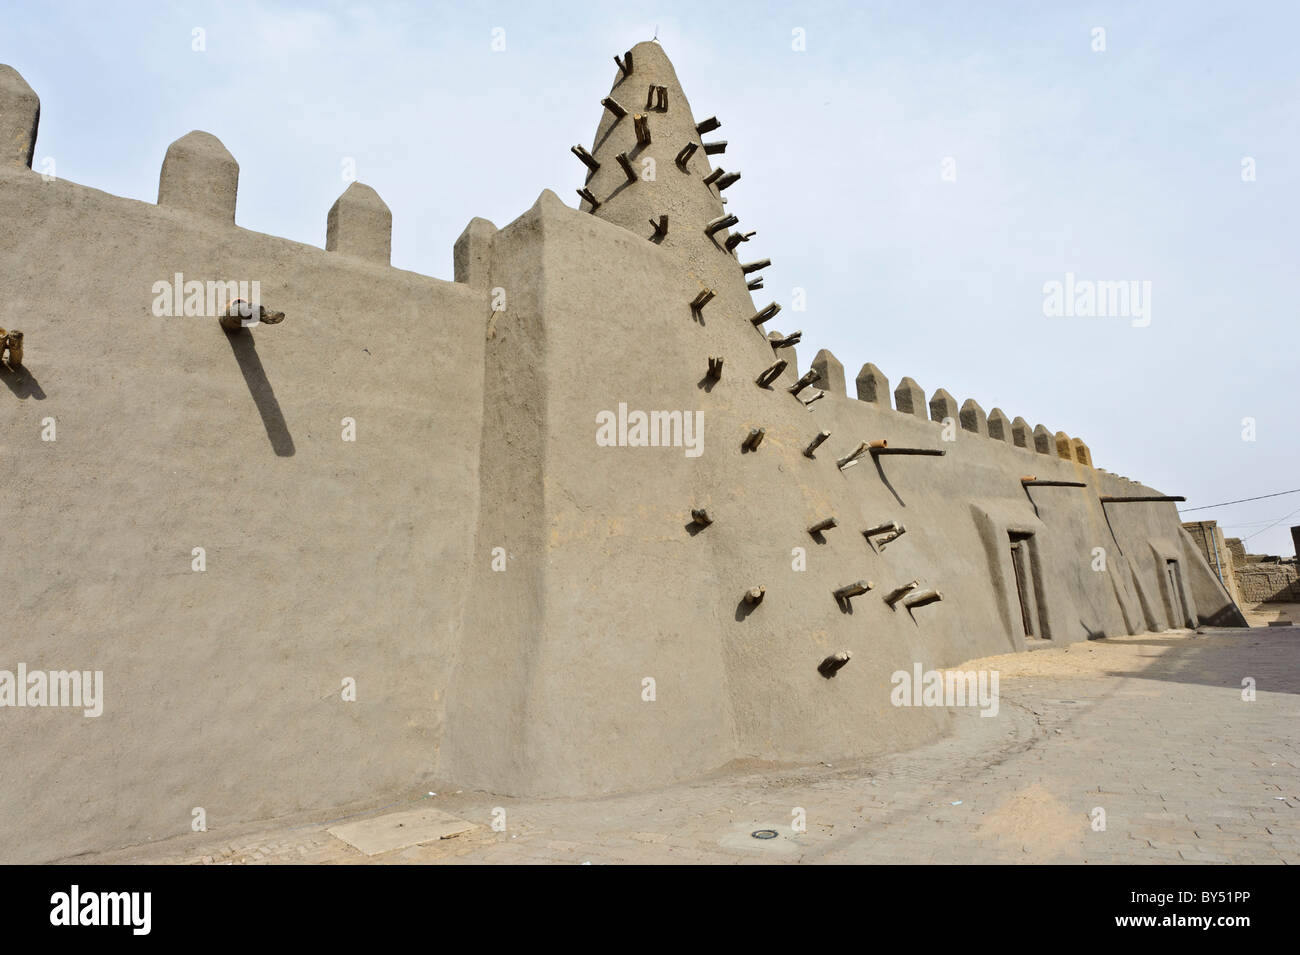 La Moschea Djingareiber in Timbuktu, Mali Foto Stock